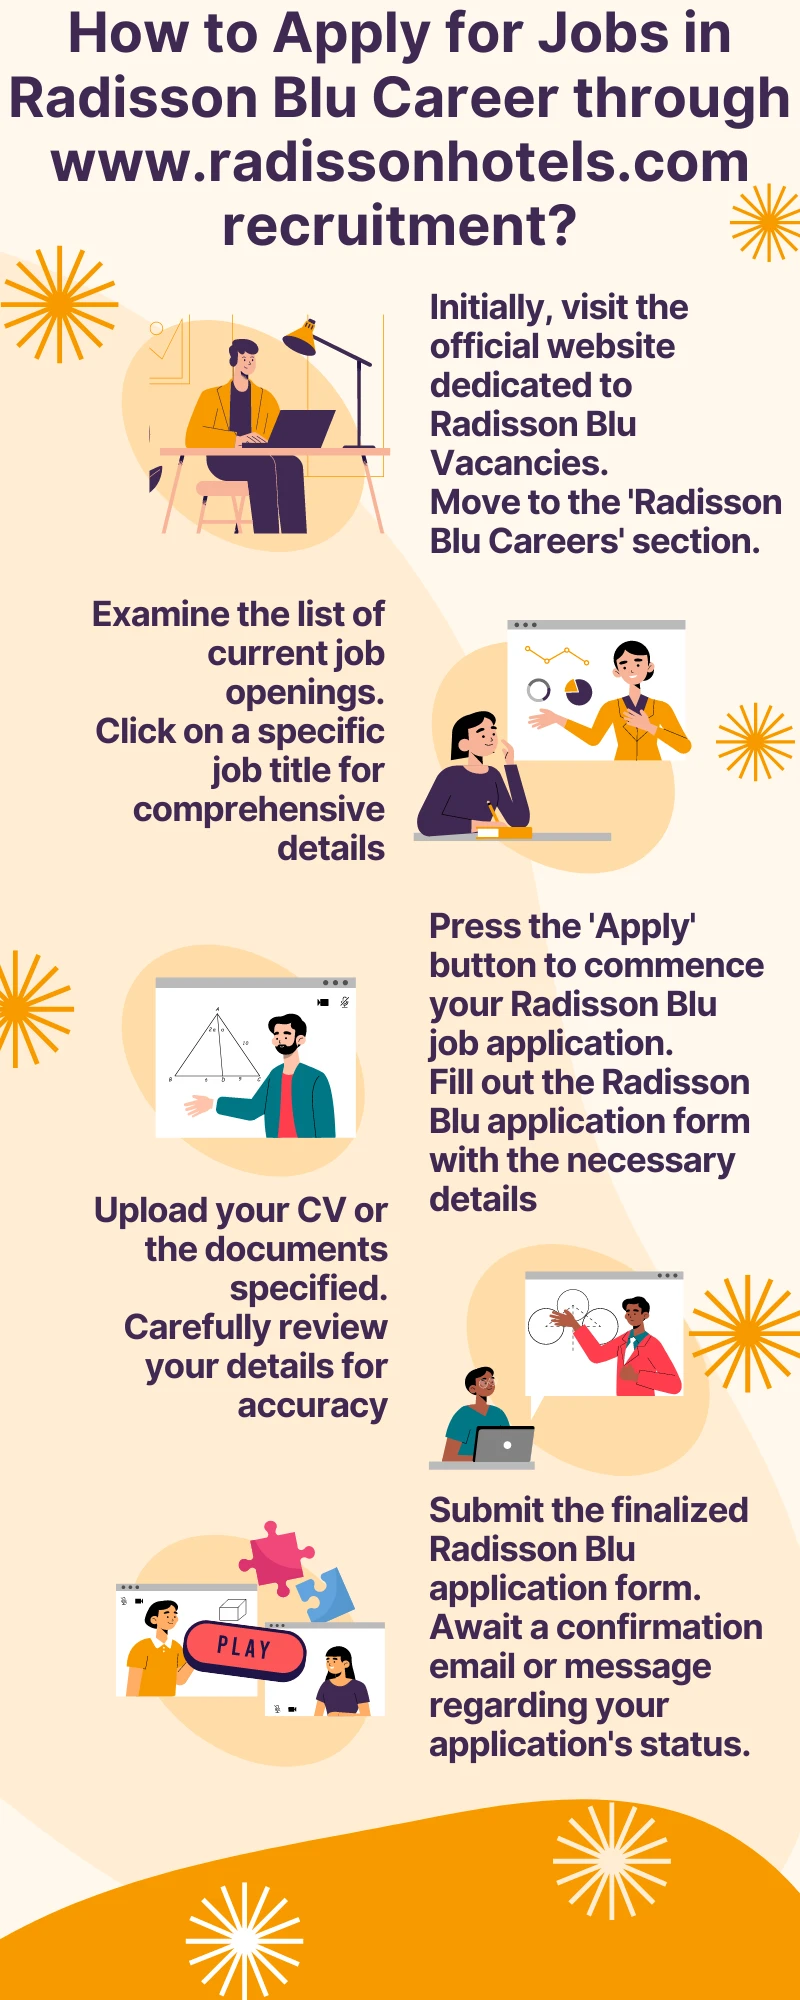 How to Apply for Jobs in Radisson Blu Career through www.radissonhotels.com recruitment?